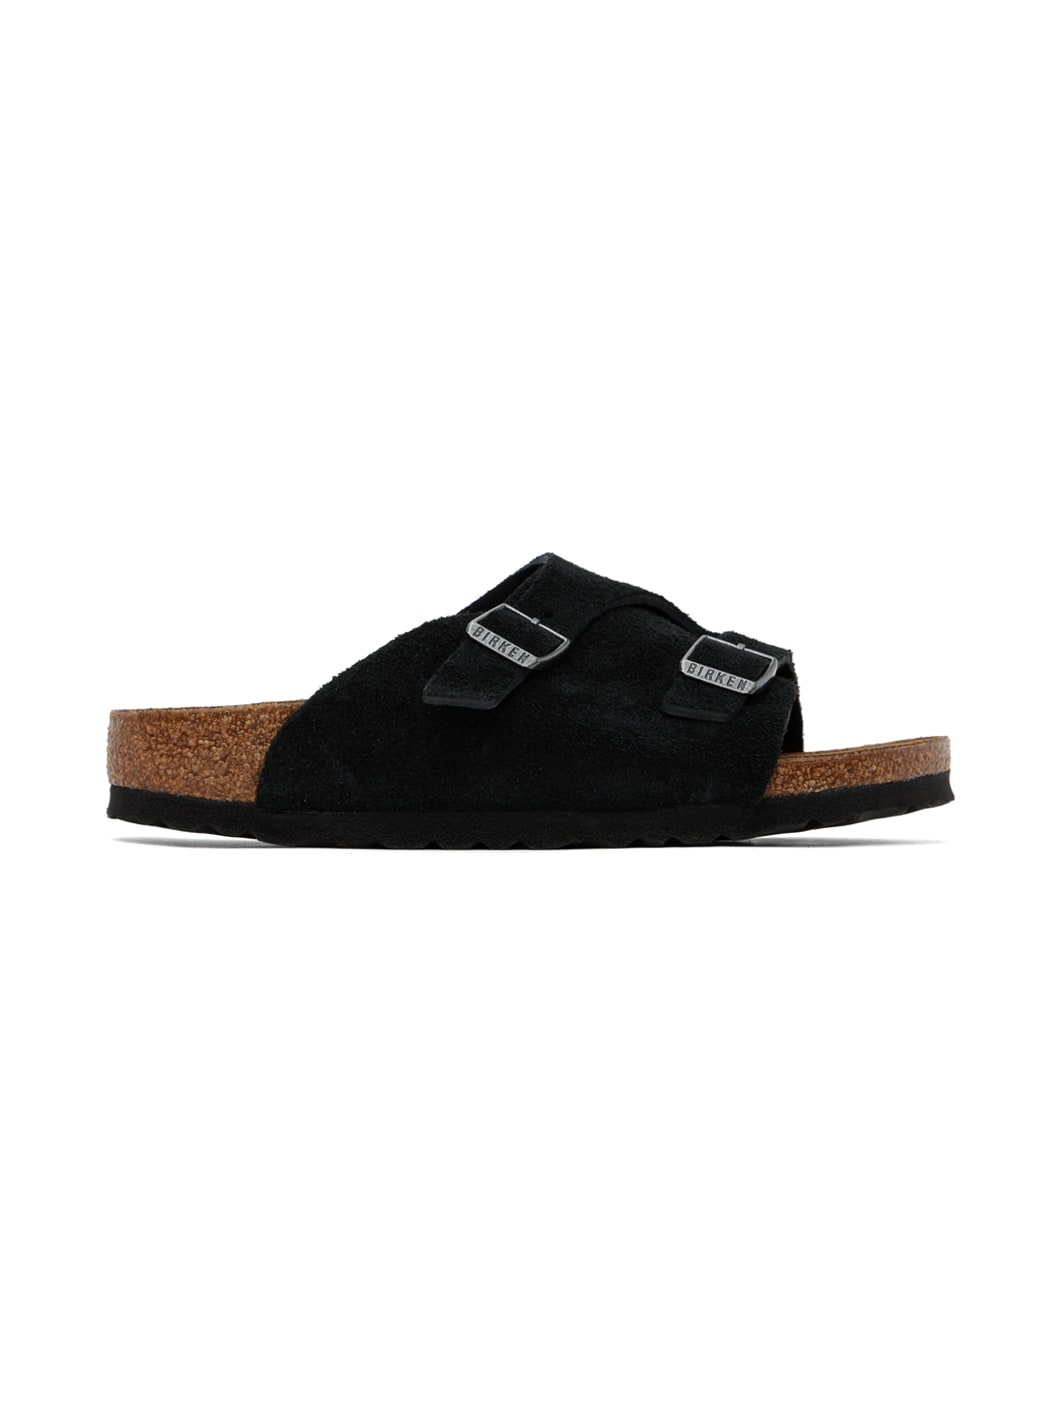 Black Narrow Zürich Sandals - 1